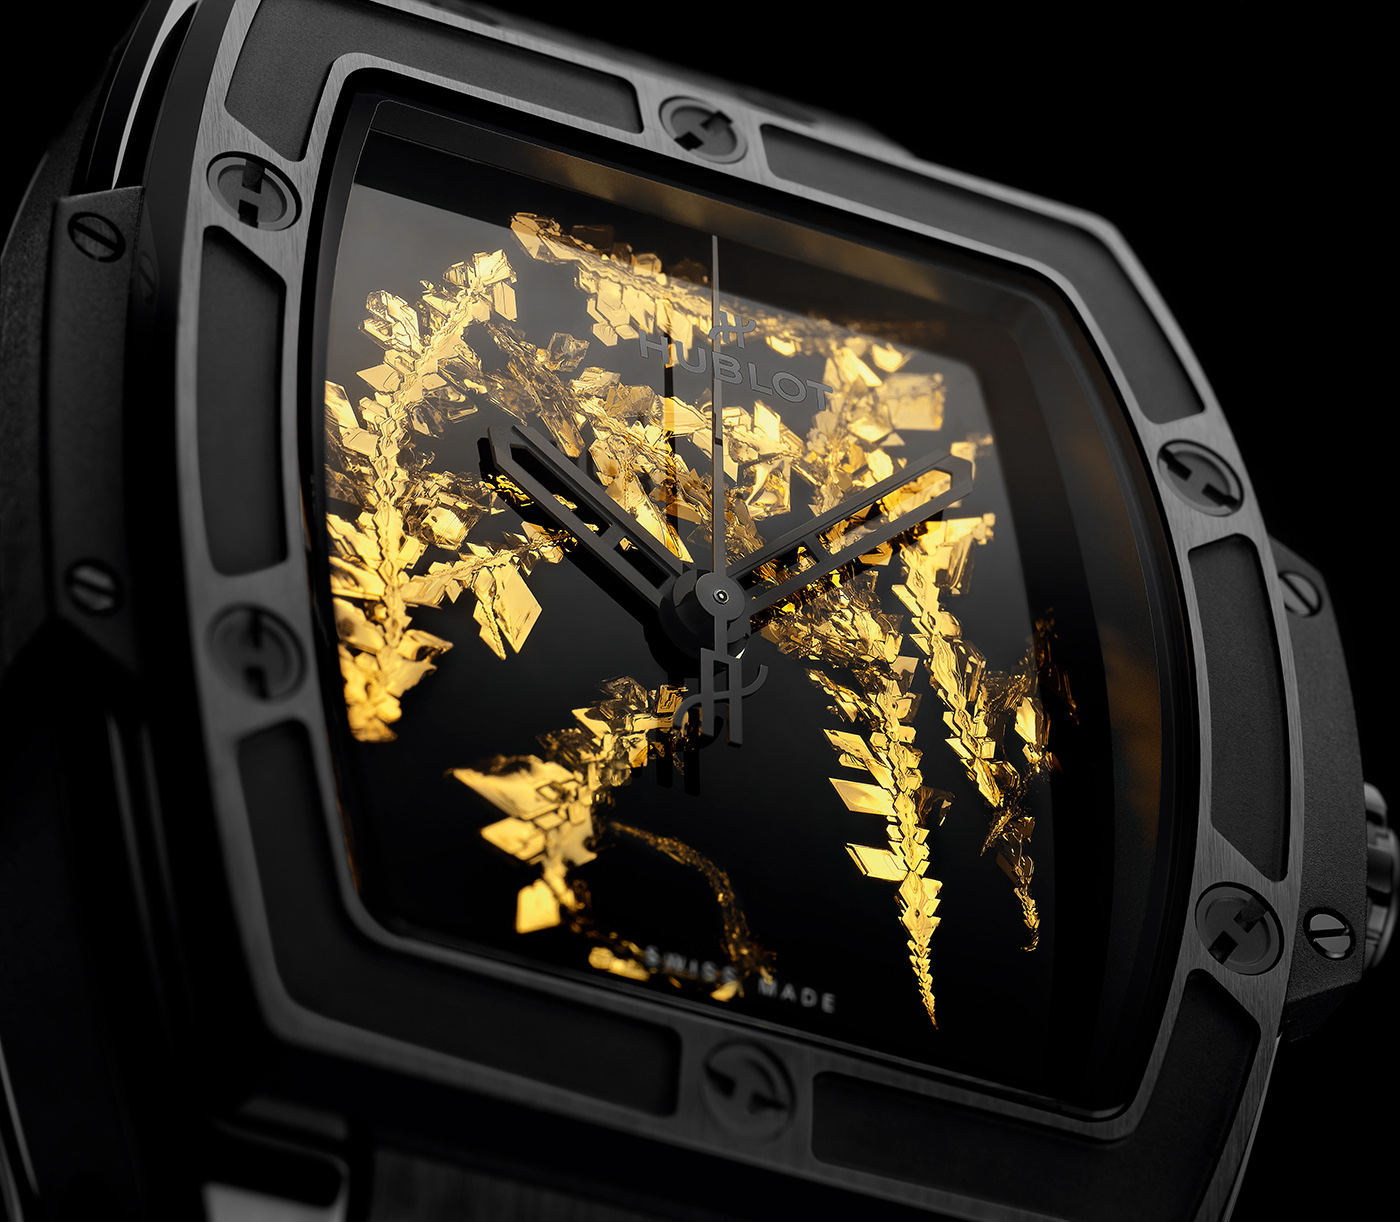 luxury Hublot watch